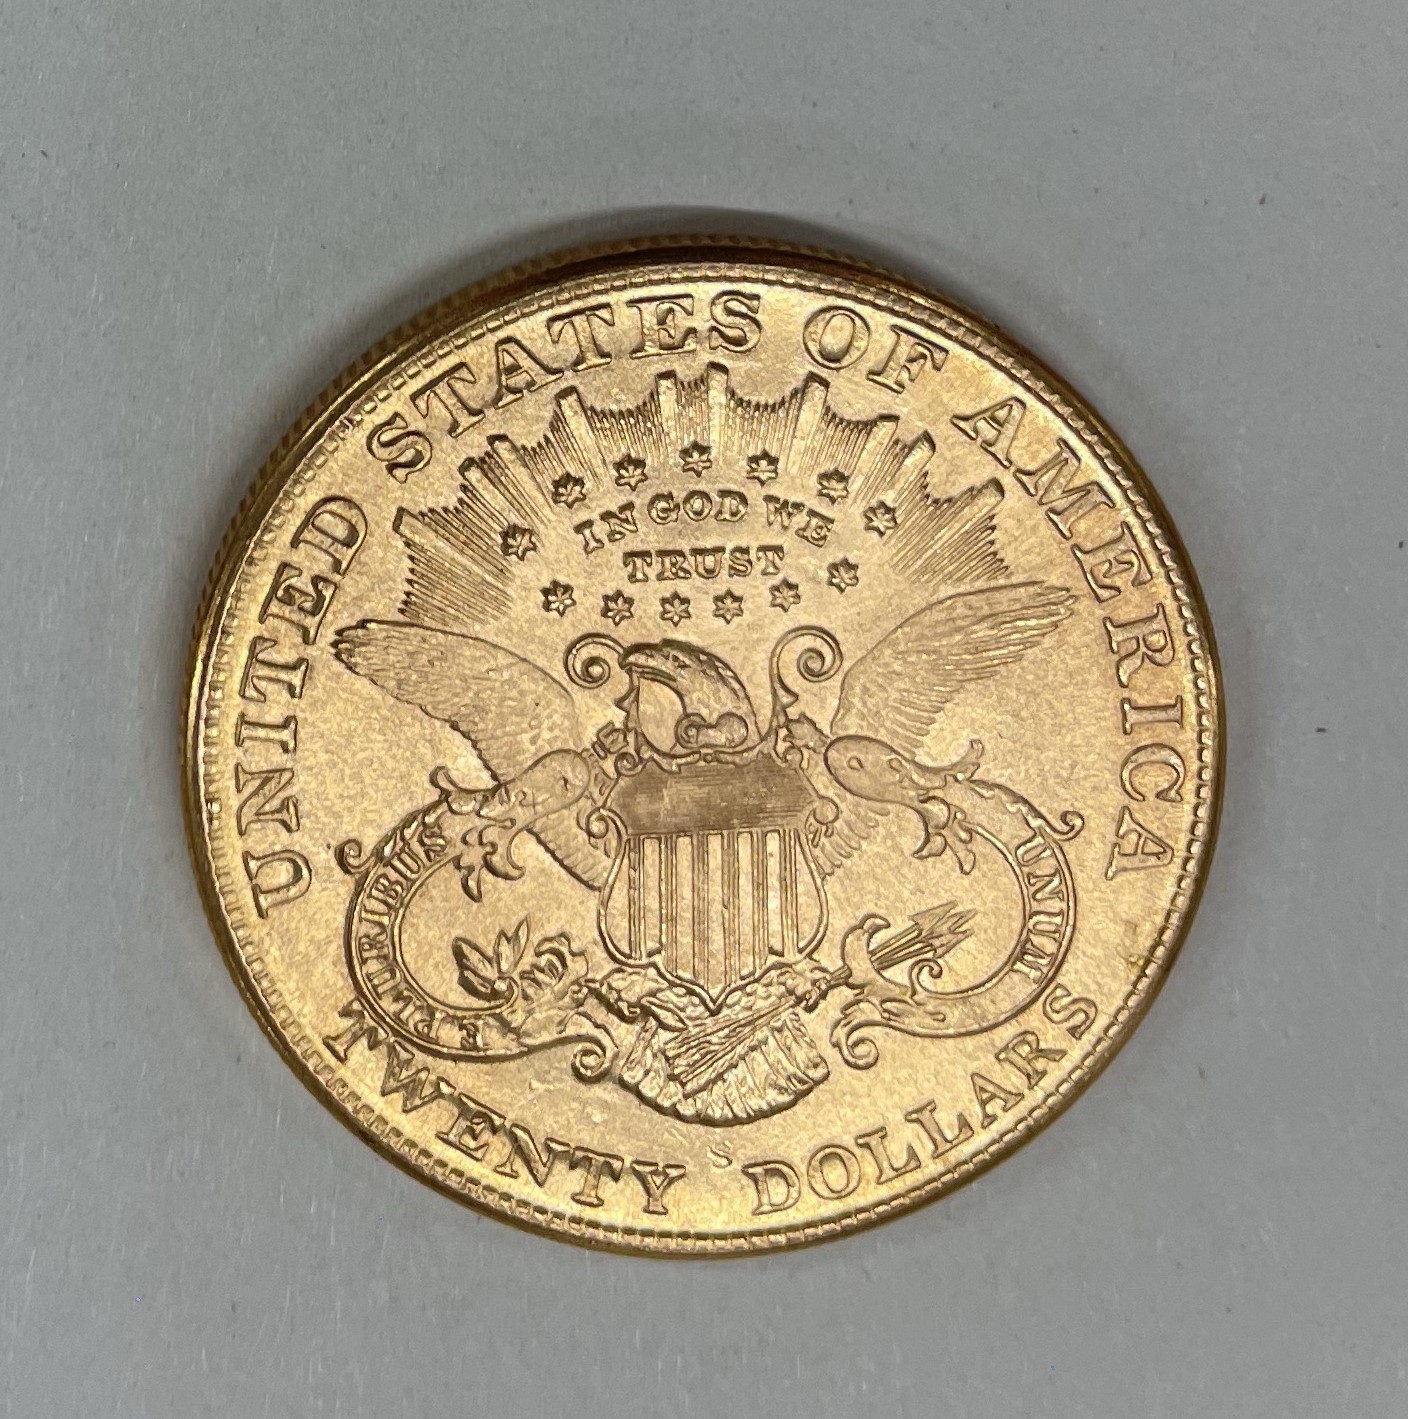 A USA Liberty head twenty dollar coin.